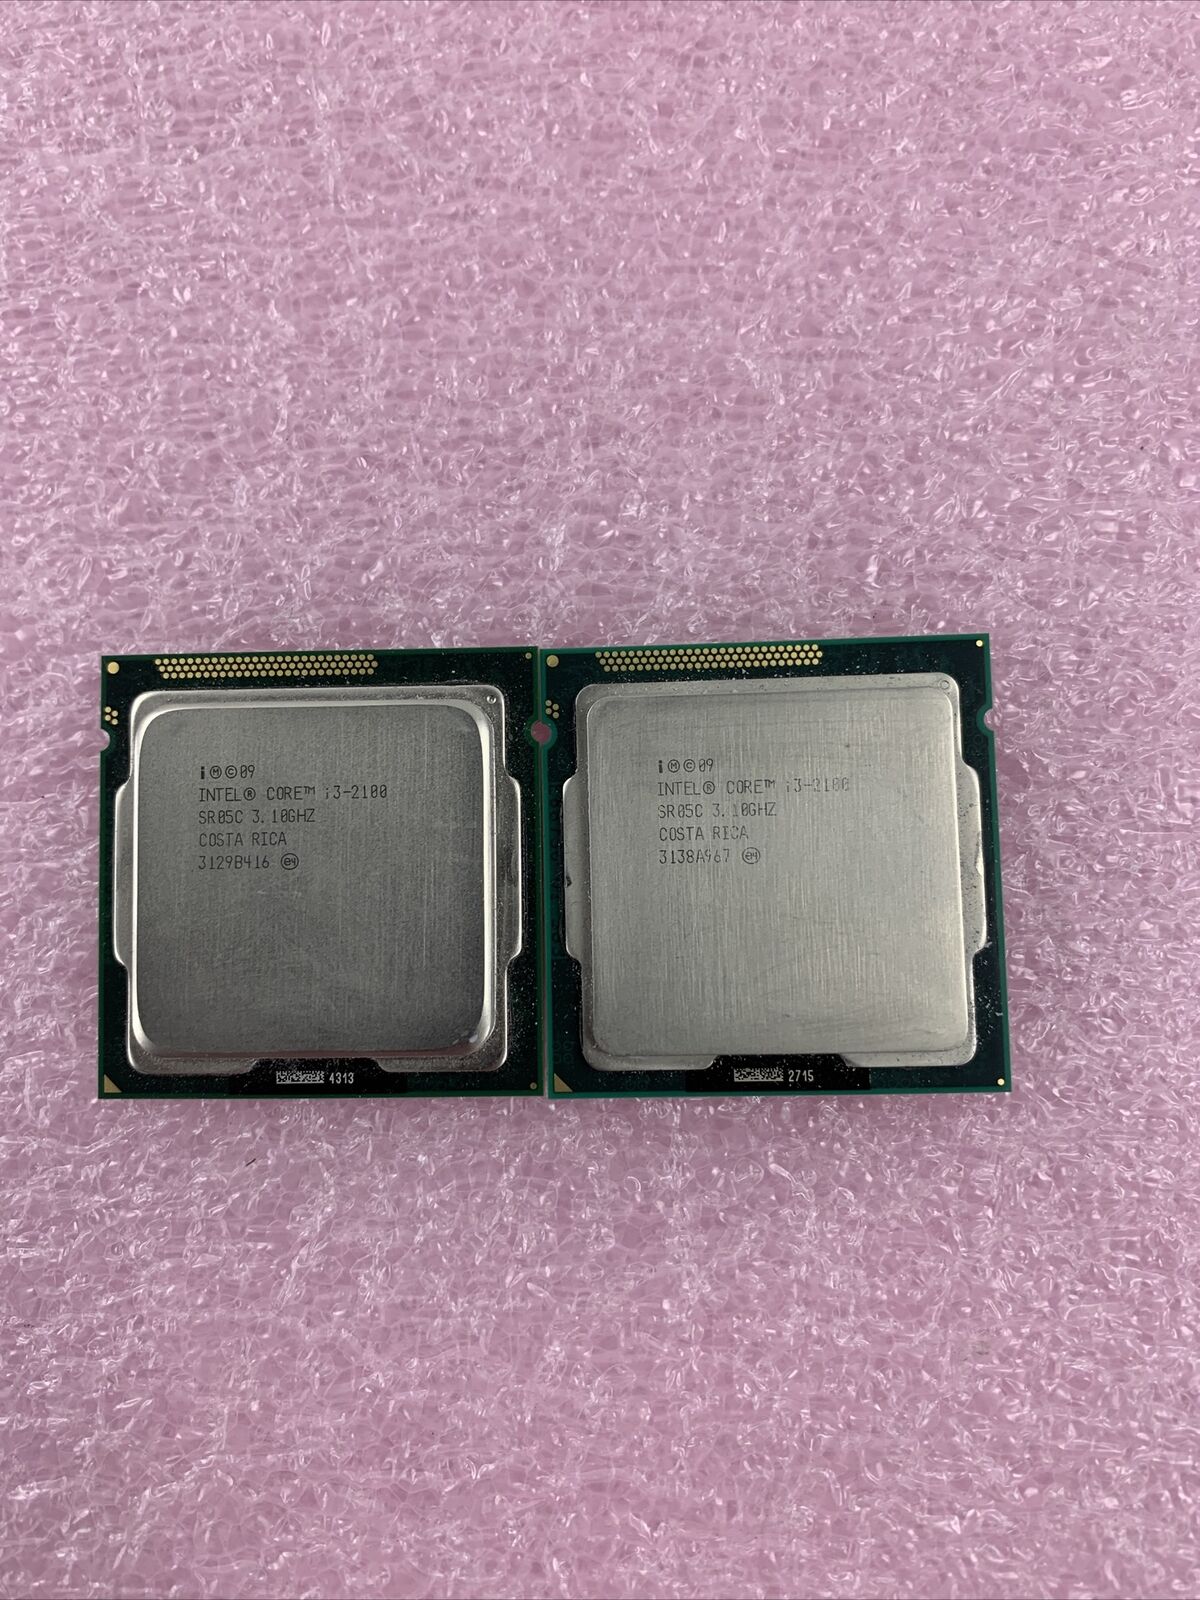 Lot of 2 Intel Core i3-2100 3.1GHz Processor